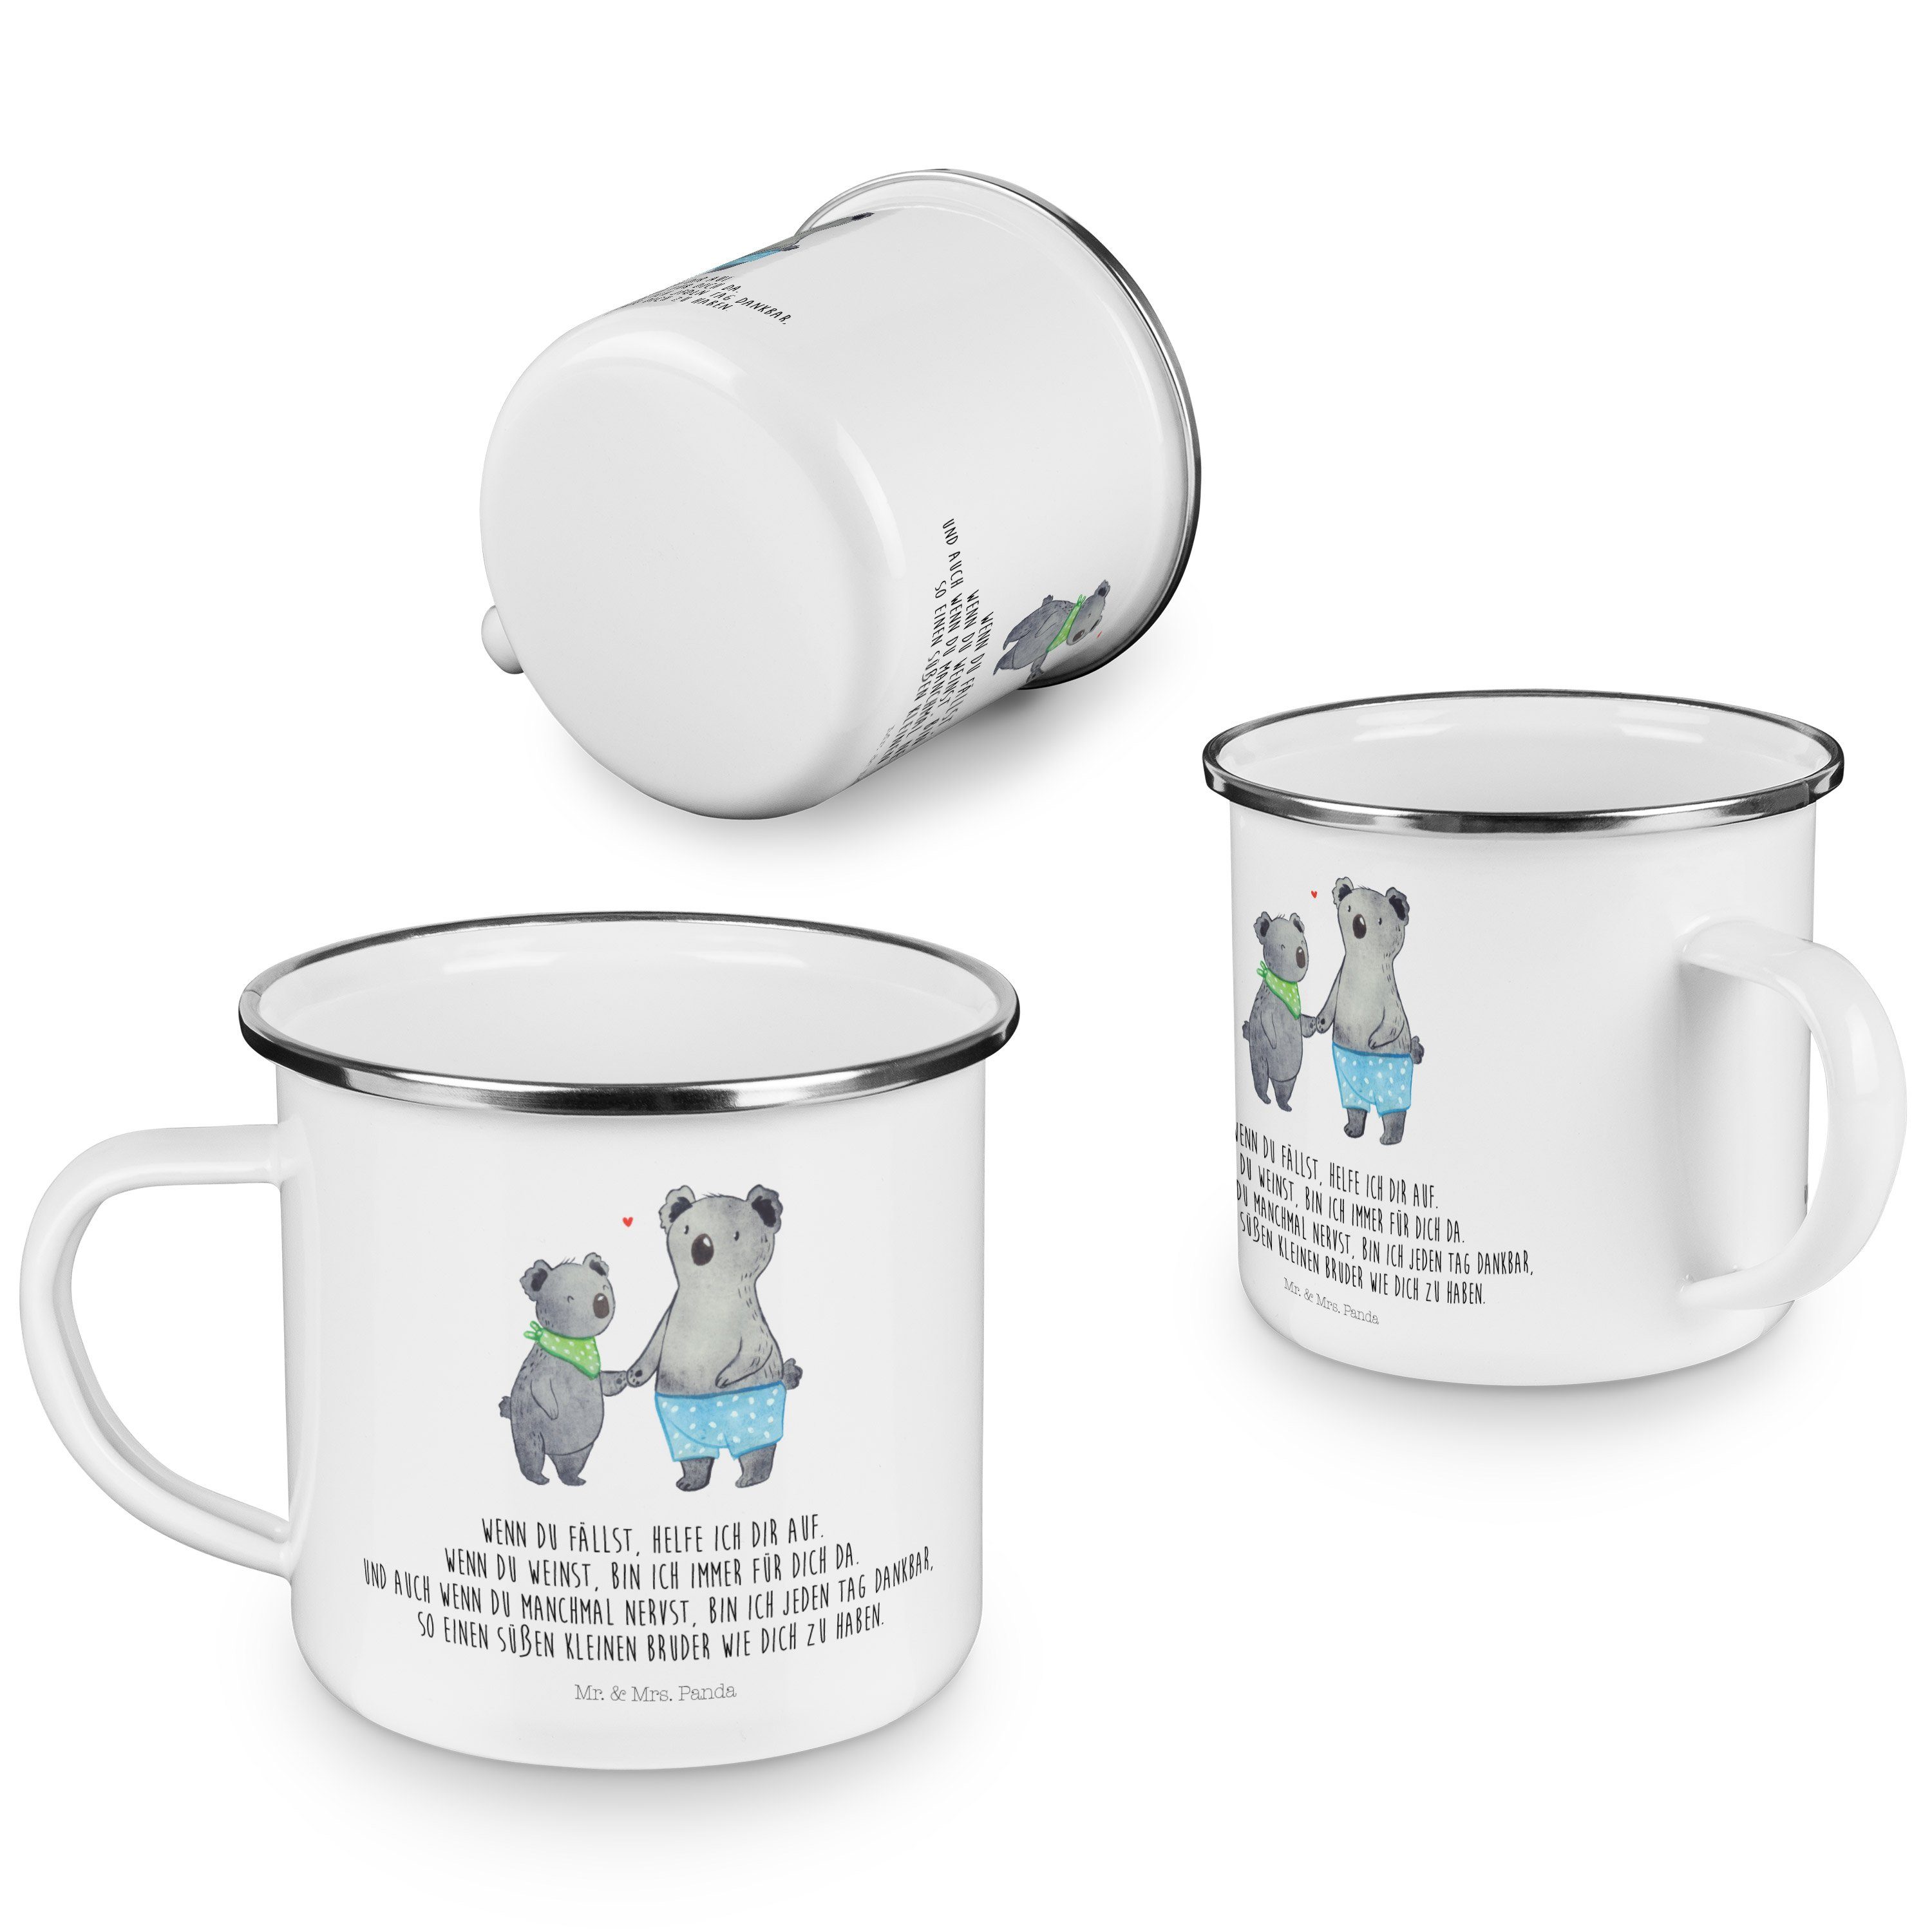 Mr. & Mrs. Kleiner Geschenk, Kaffee - Blechtasse, - Koala Weiß Emaille Becher Bruder Panda Muttertag